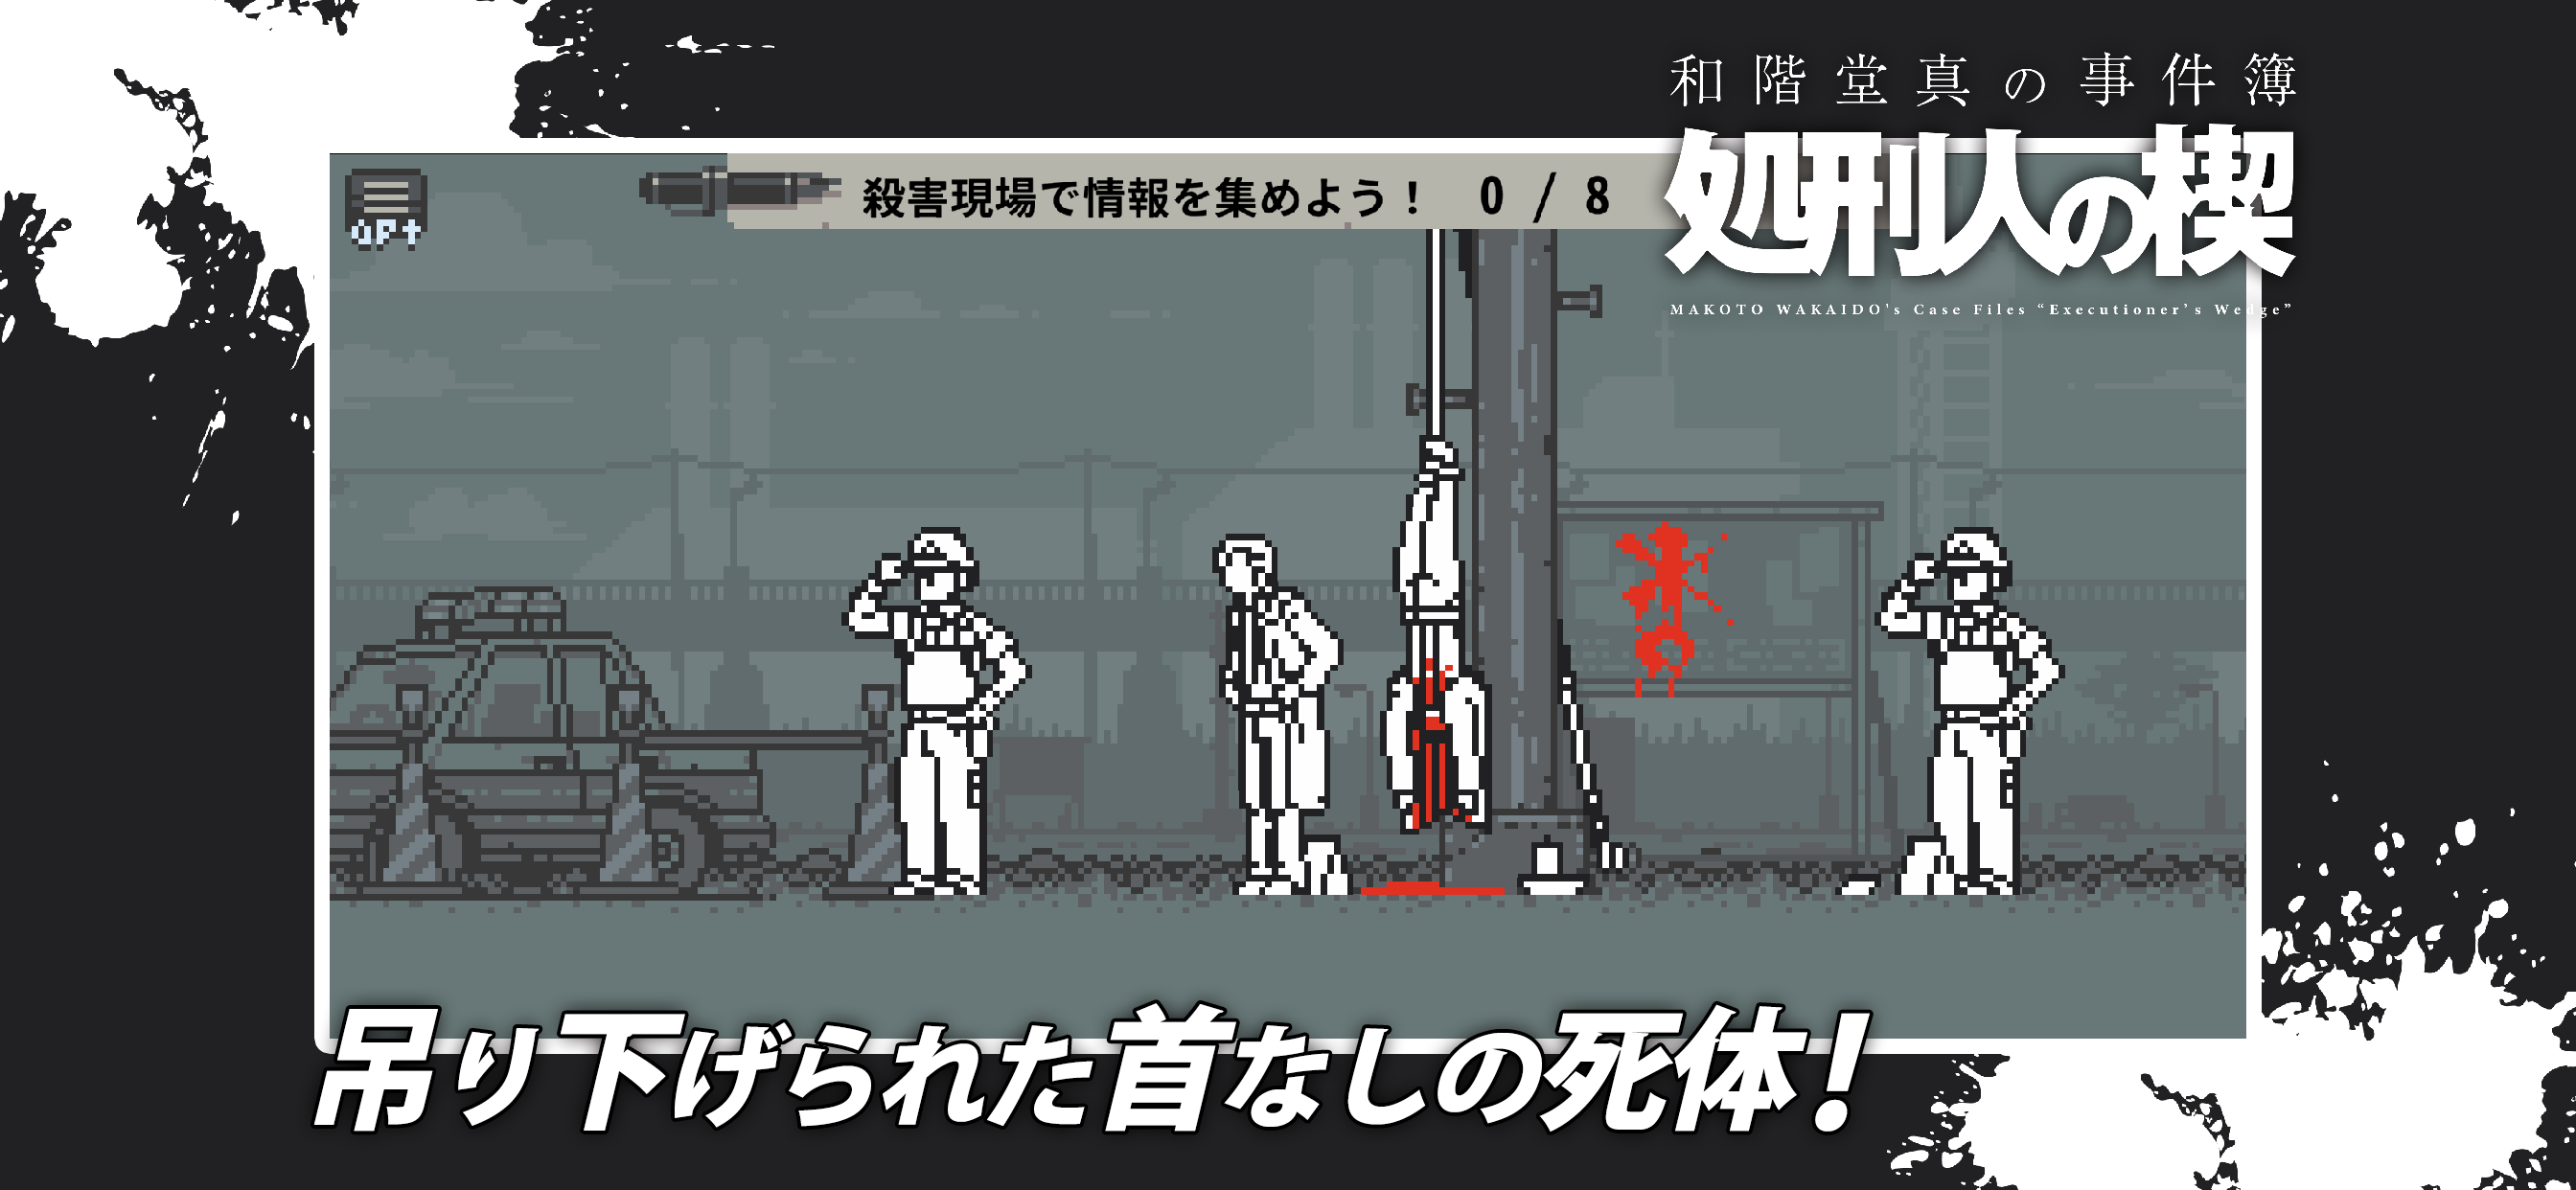 Screenshot 1 of Archivos del caso de Wakaido Makoto: la misteriosa aventura de la luz del verdugo 1.0.5